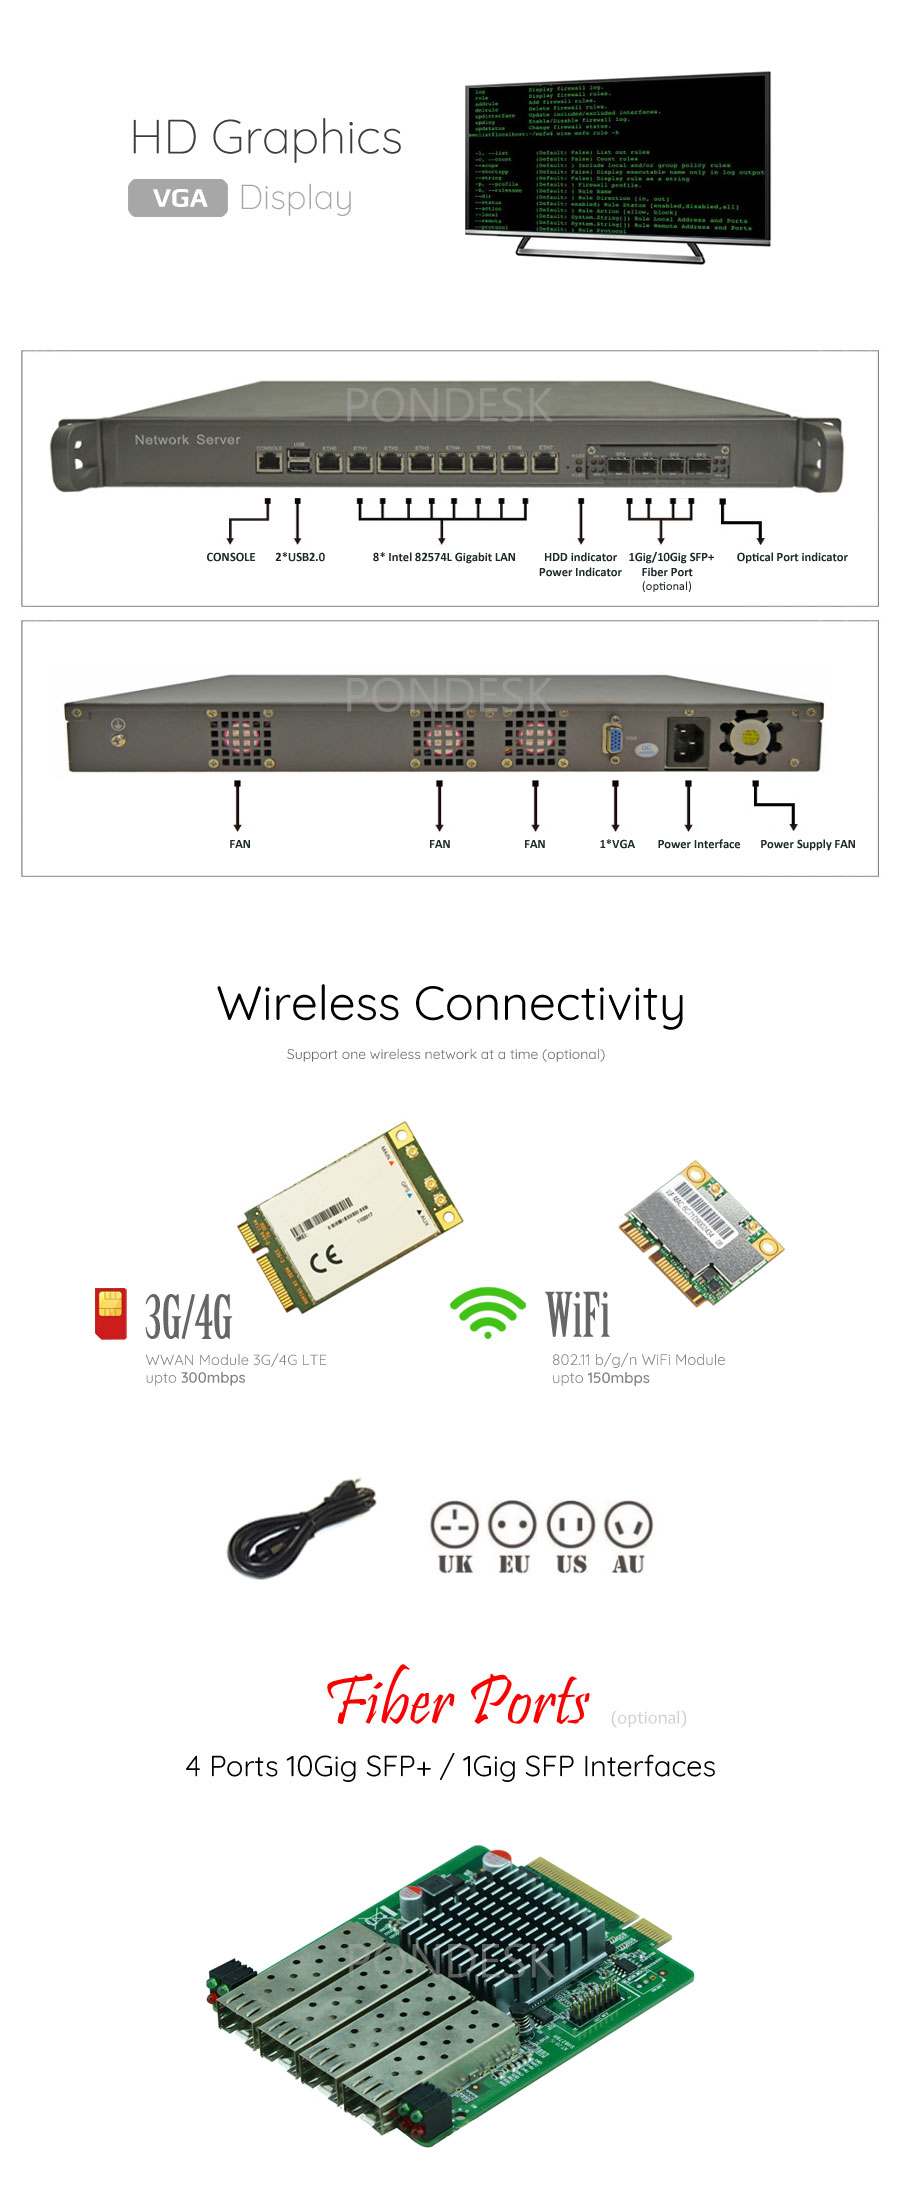 8 LAN 10Gig Fiber SFP+ 4G NGFW Firewall 1U Rackmount Server - NSHO-001 | Image